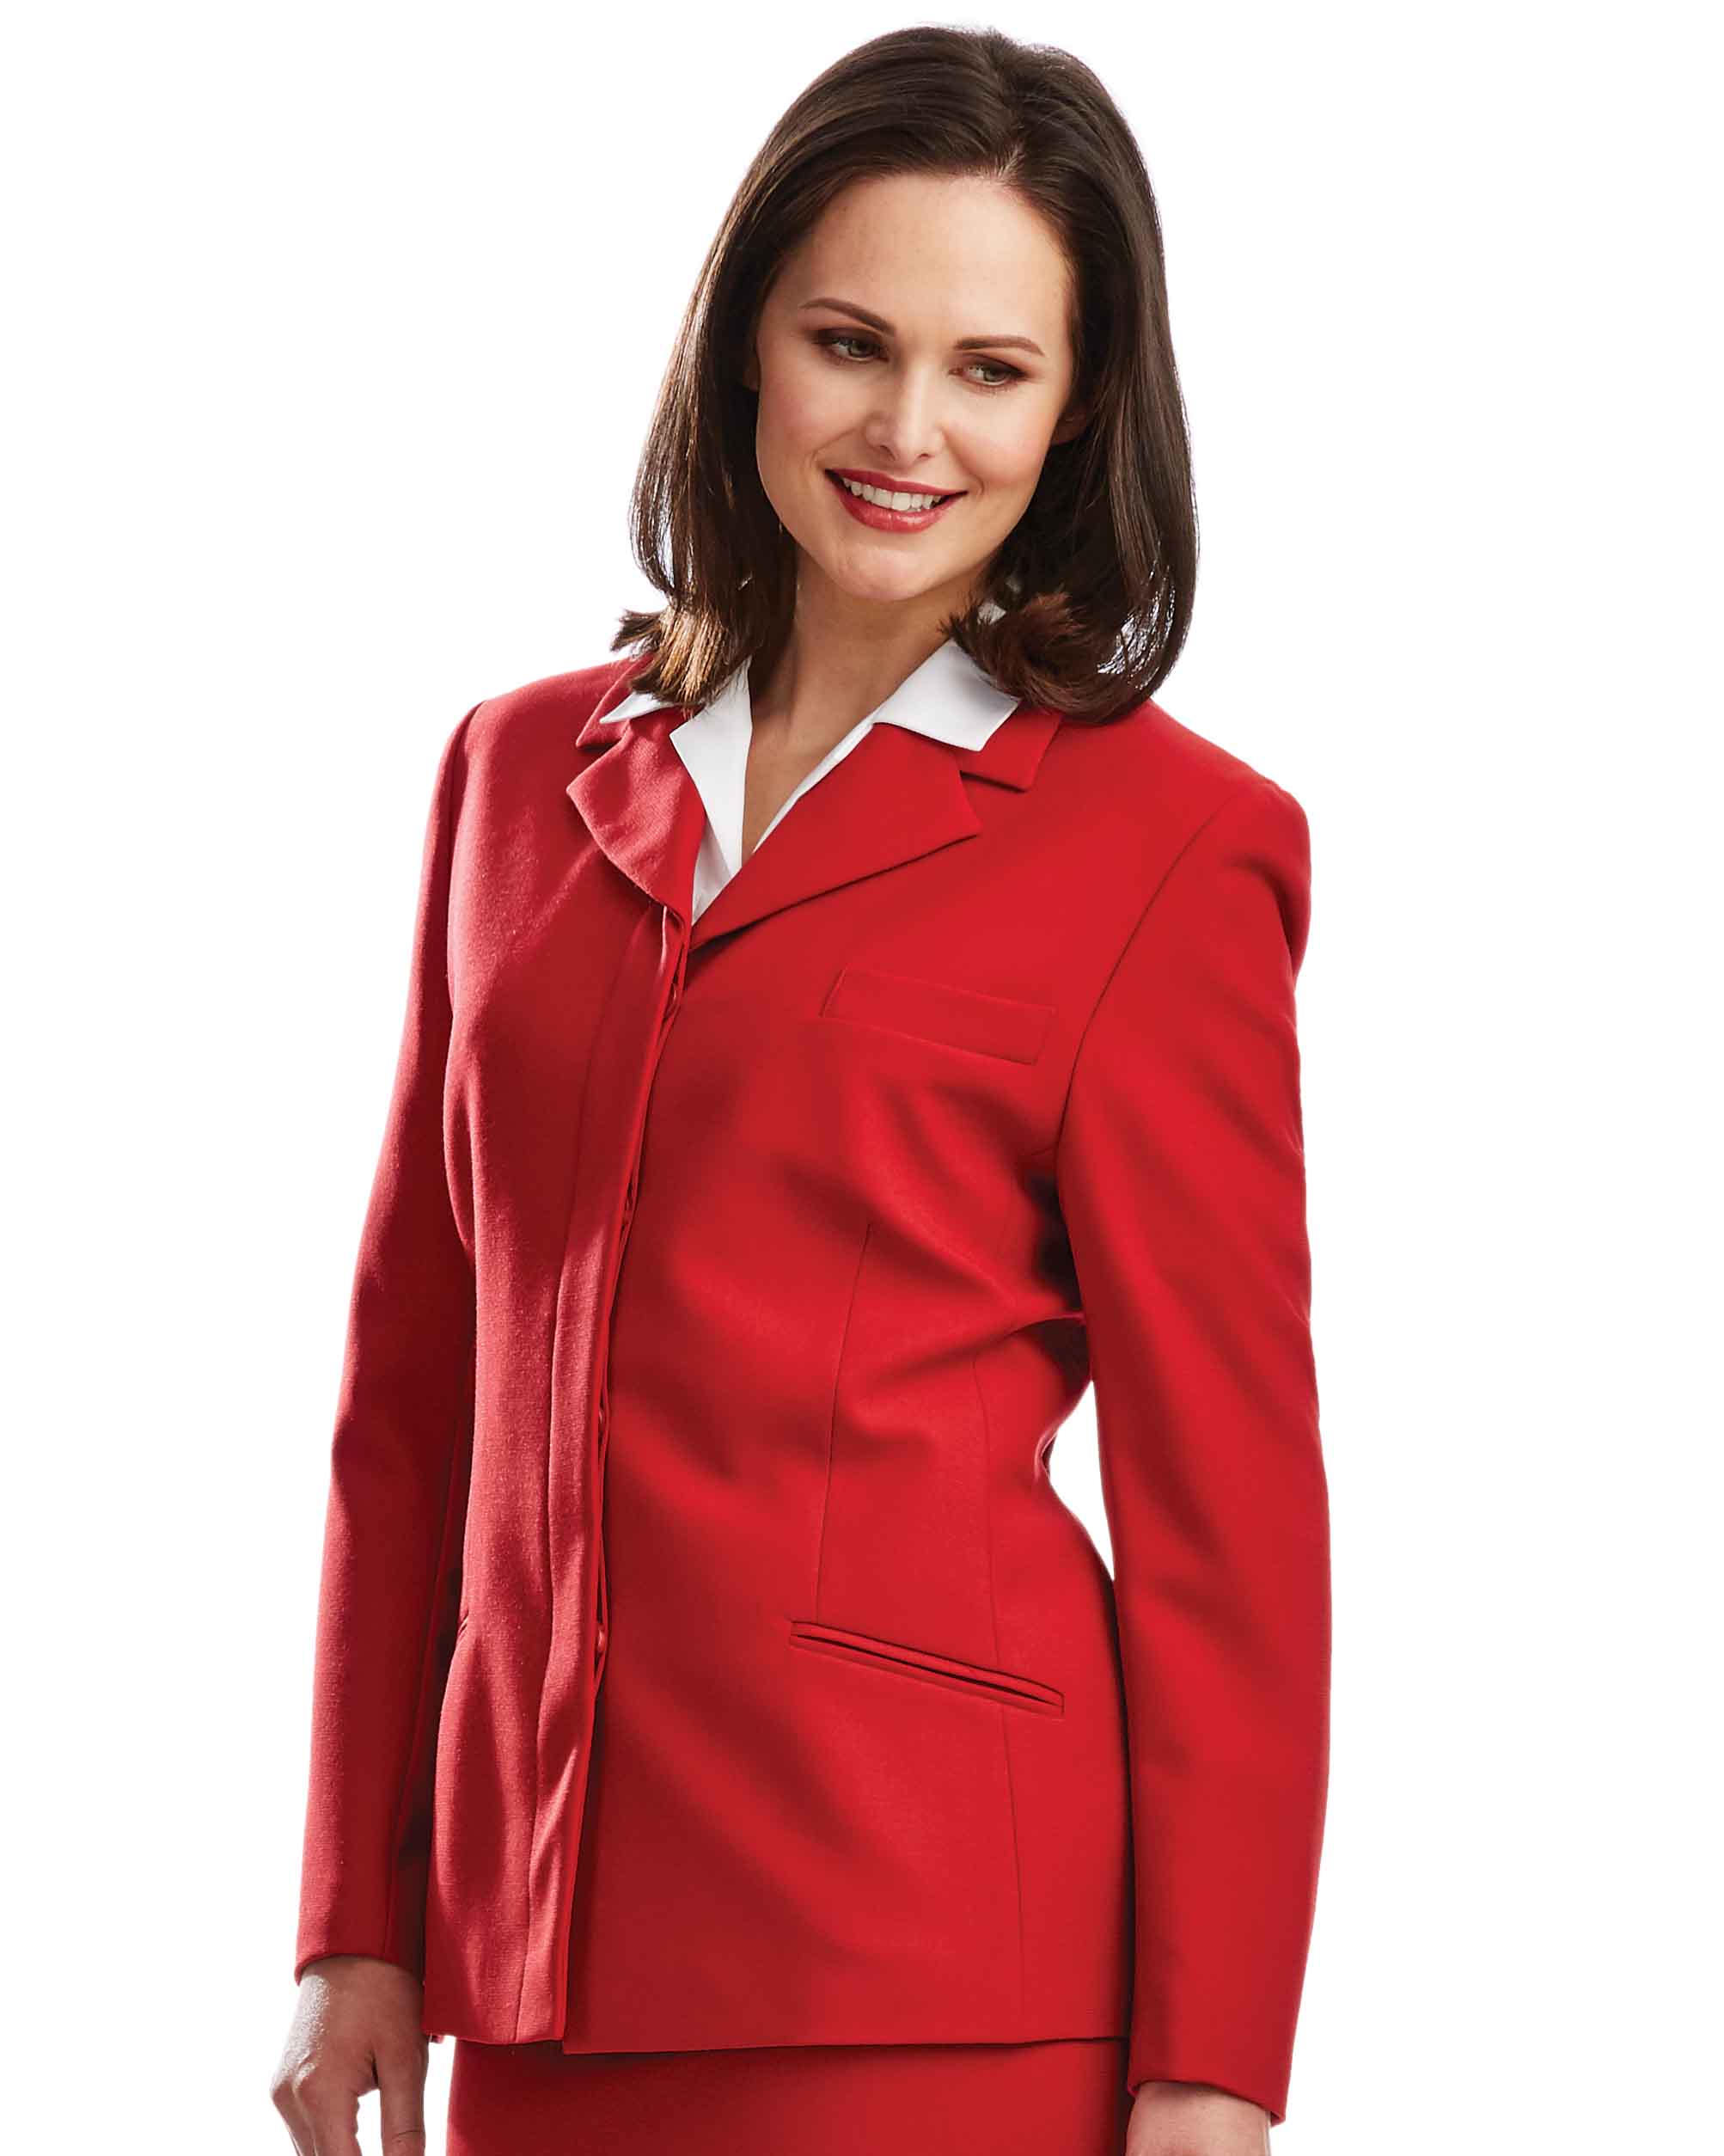 Women’s Cherry Red Tailored Jacket